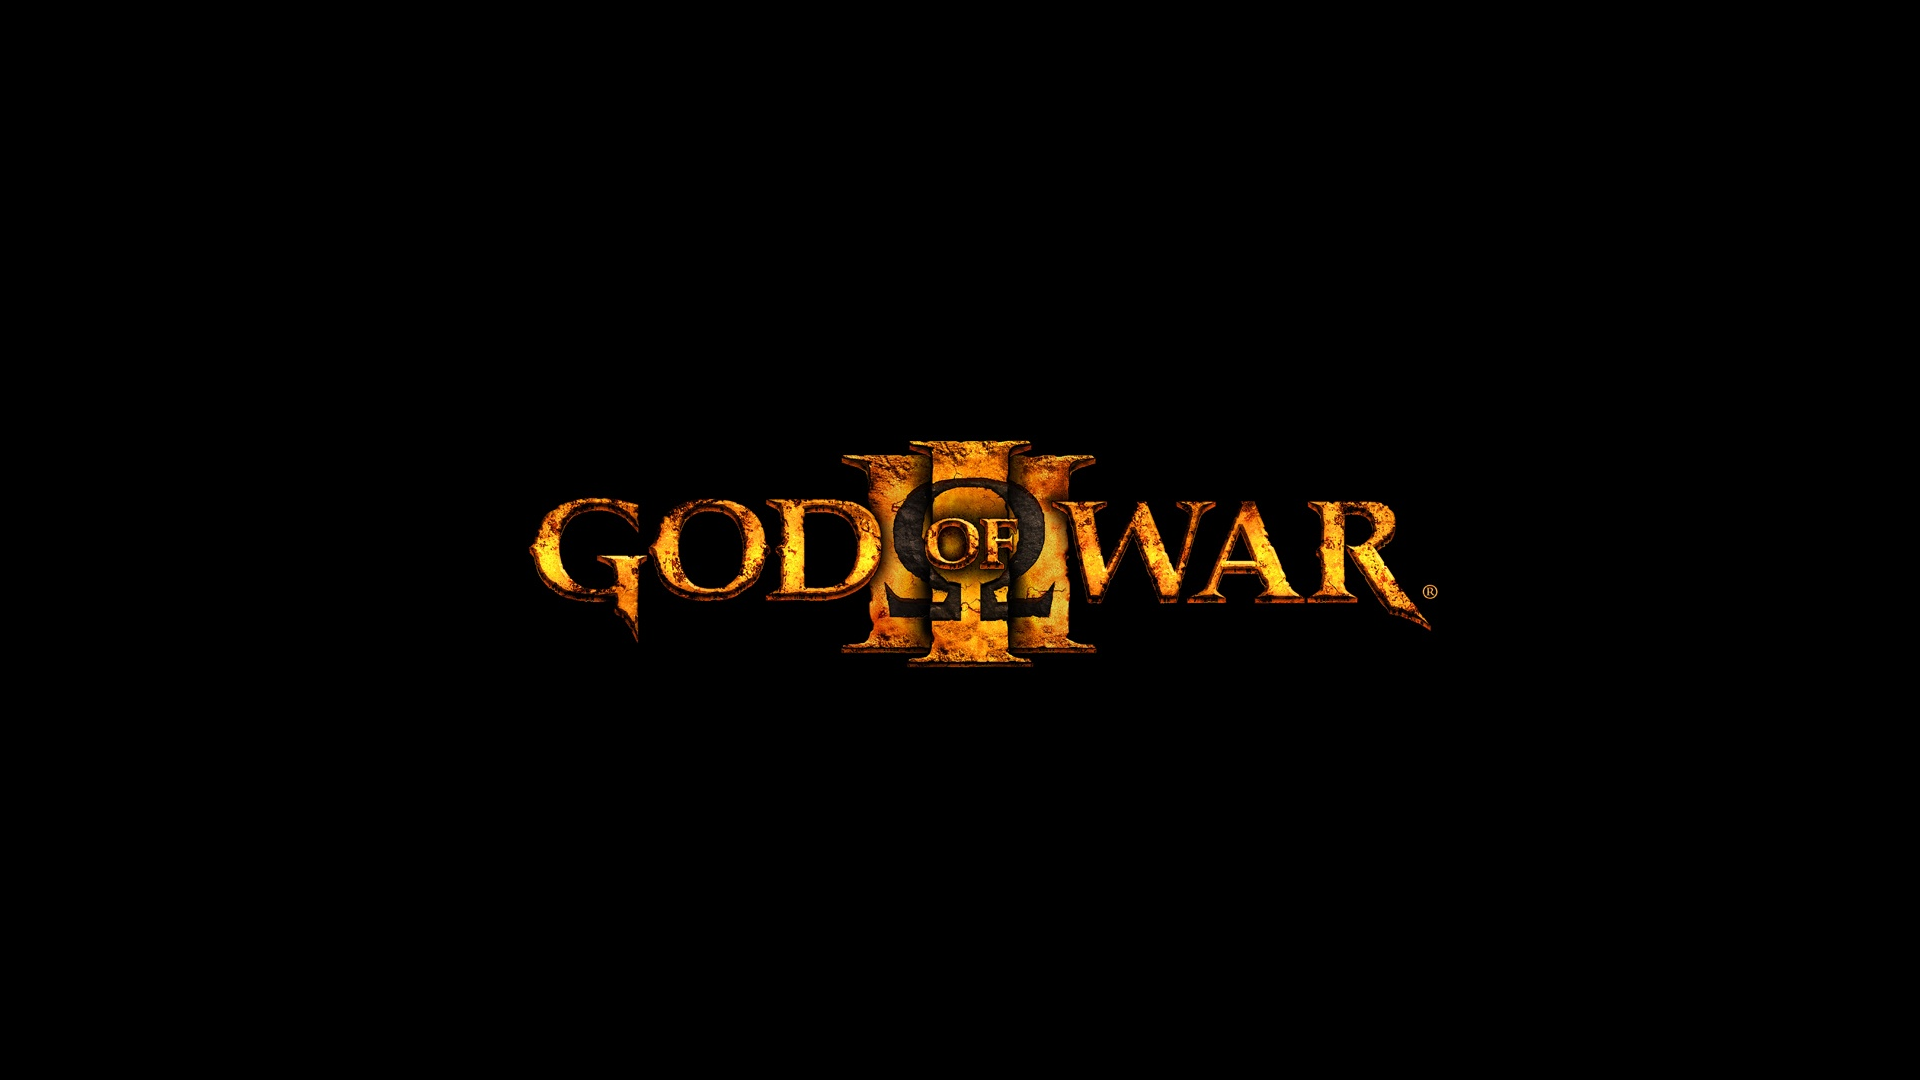 Wallpapers, animated, godofwar, albums, god, war, thetjalian - 10254